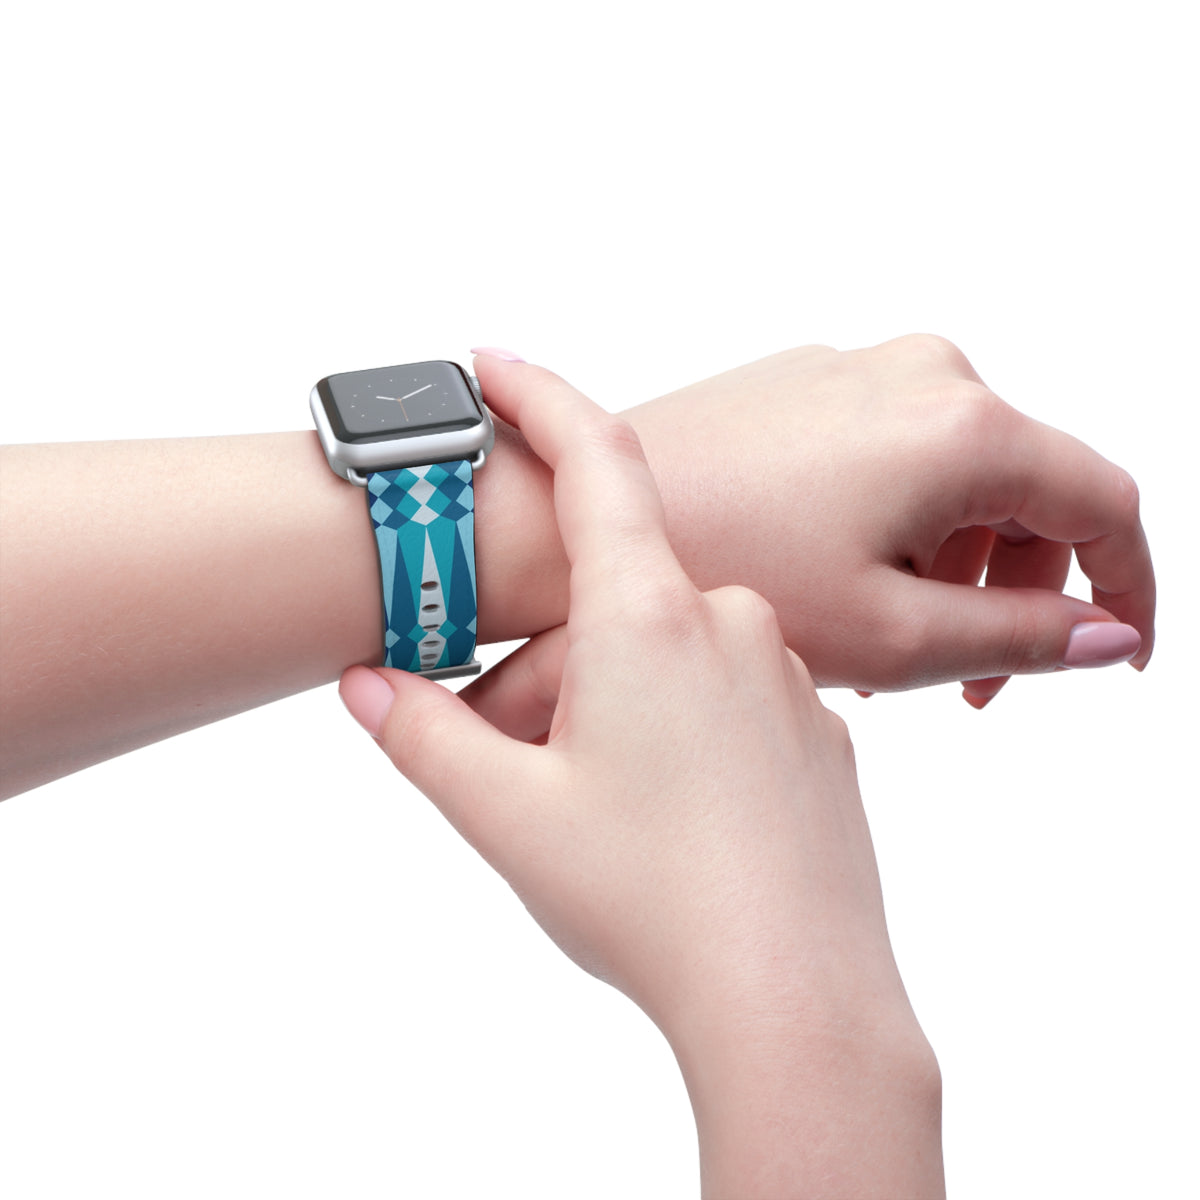 Blue Ribbonwork Leather Apple Watch Band